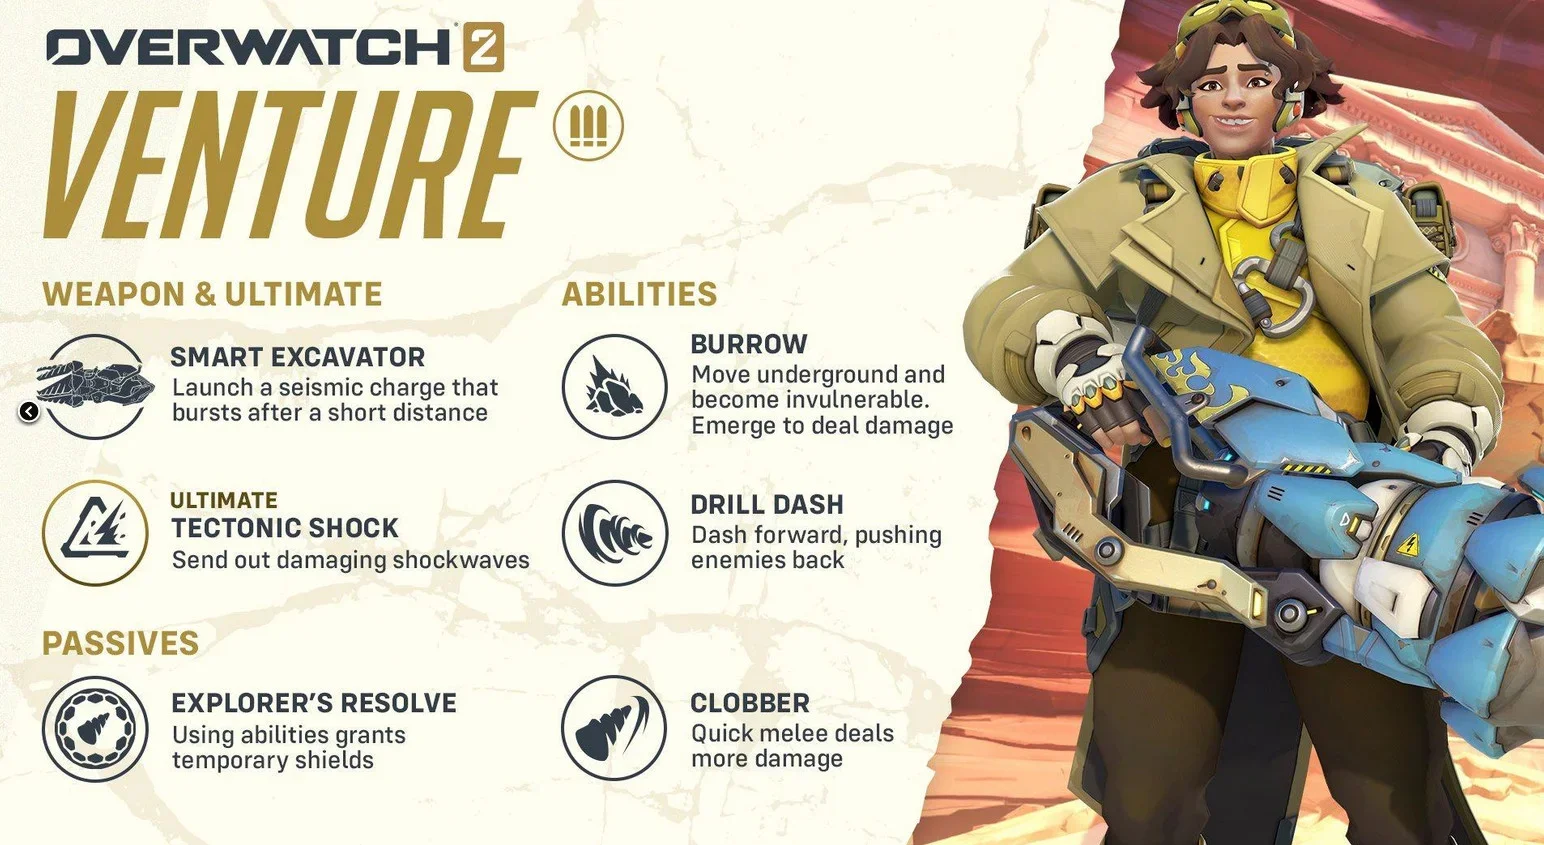 Blizzard представила трейлер и список способностей Авентюры из Overwatch 2 - фото 1